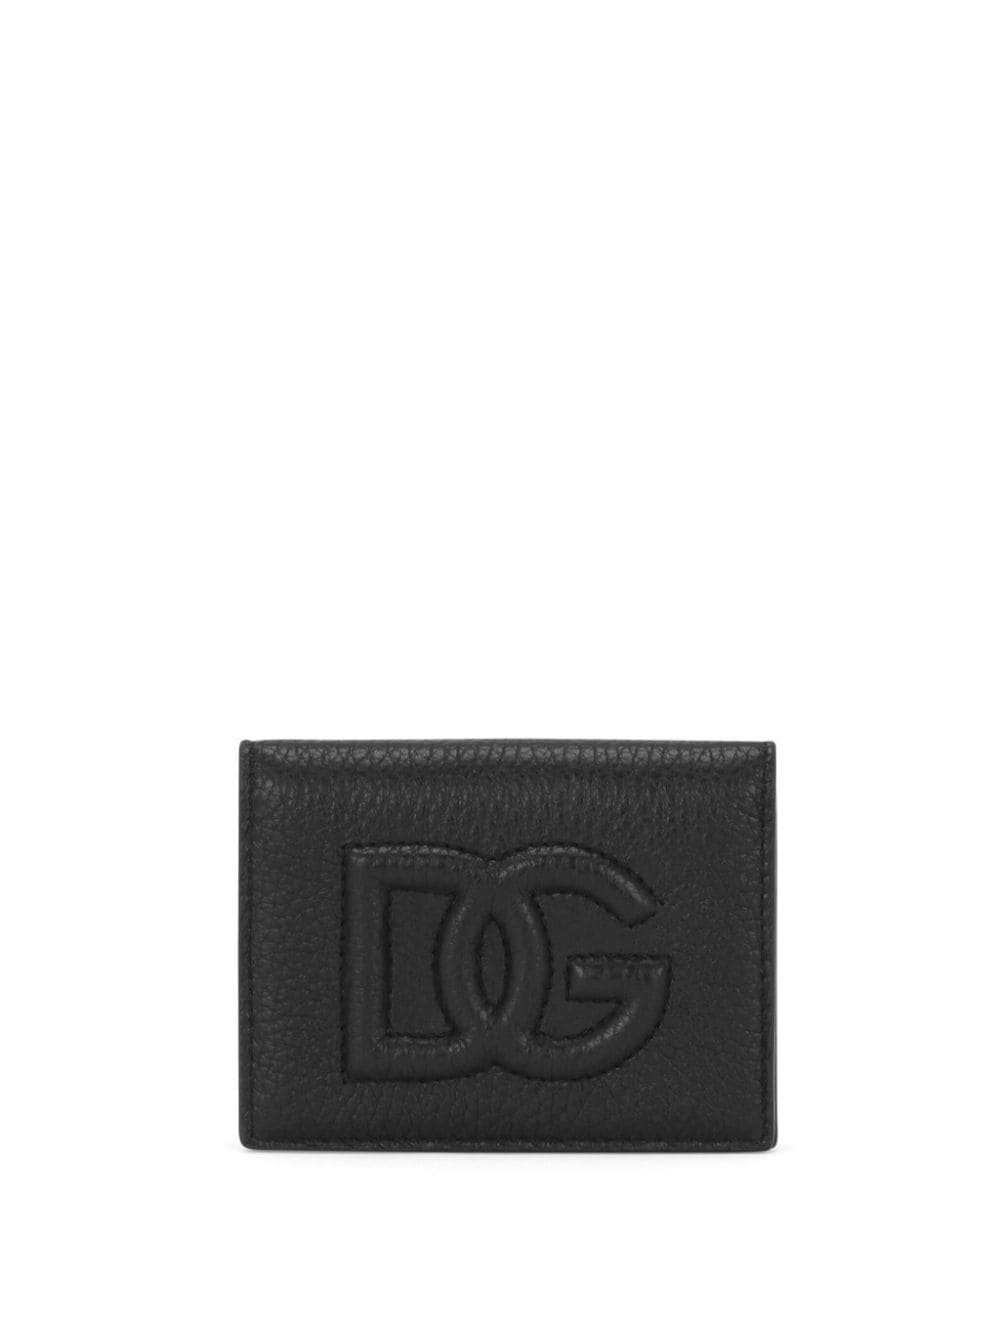 DG logo leather wallet - 1